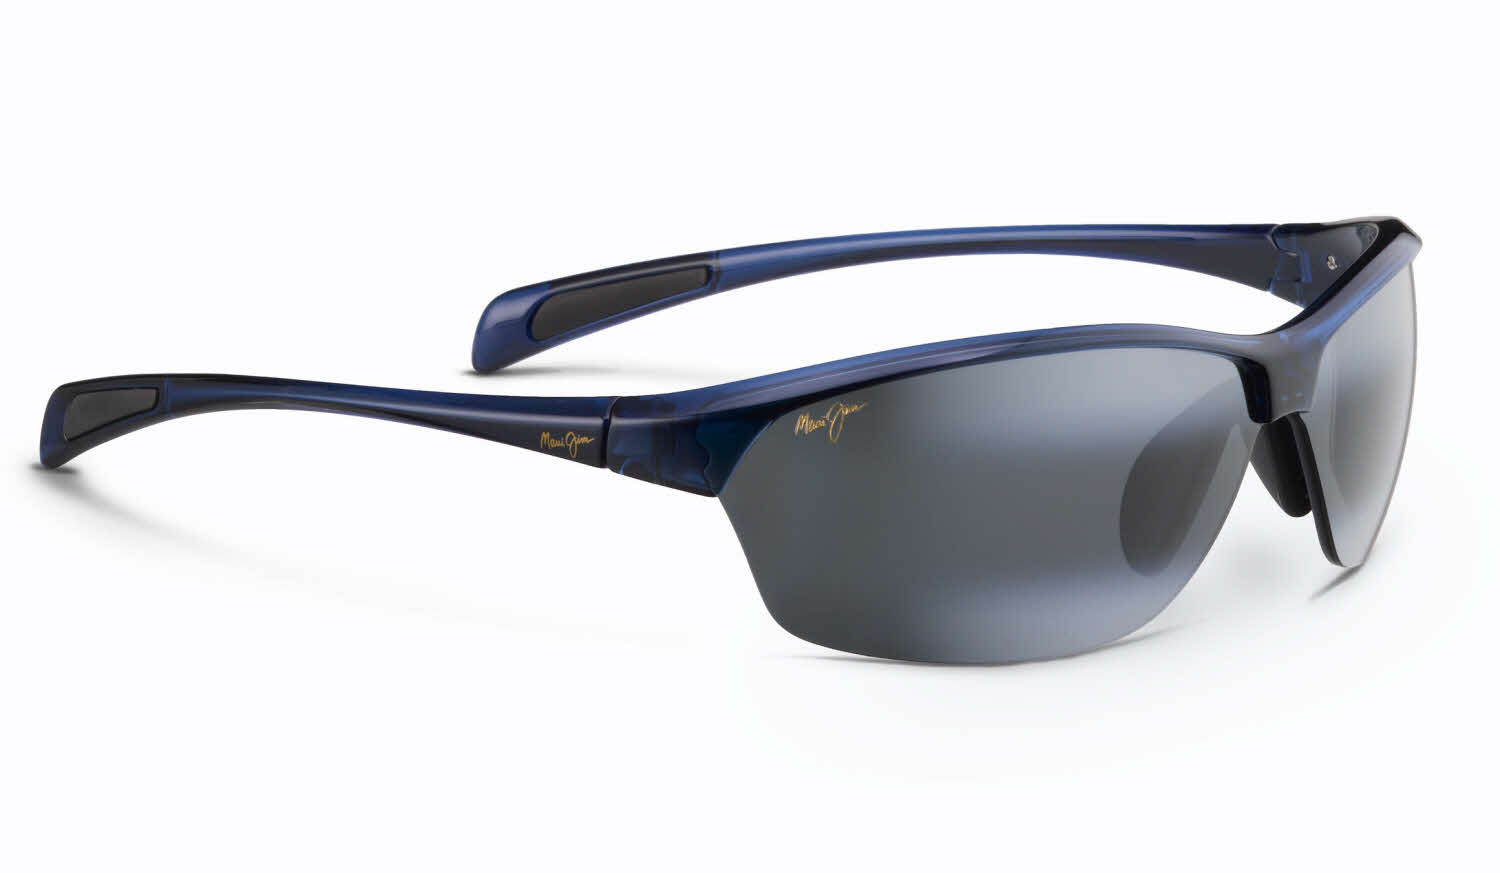 Maui Jim Hot Sands-426 Sunglasses | Free Shipping